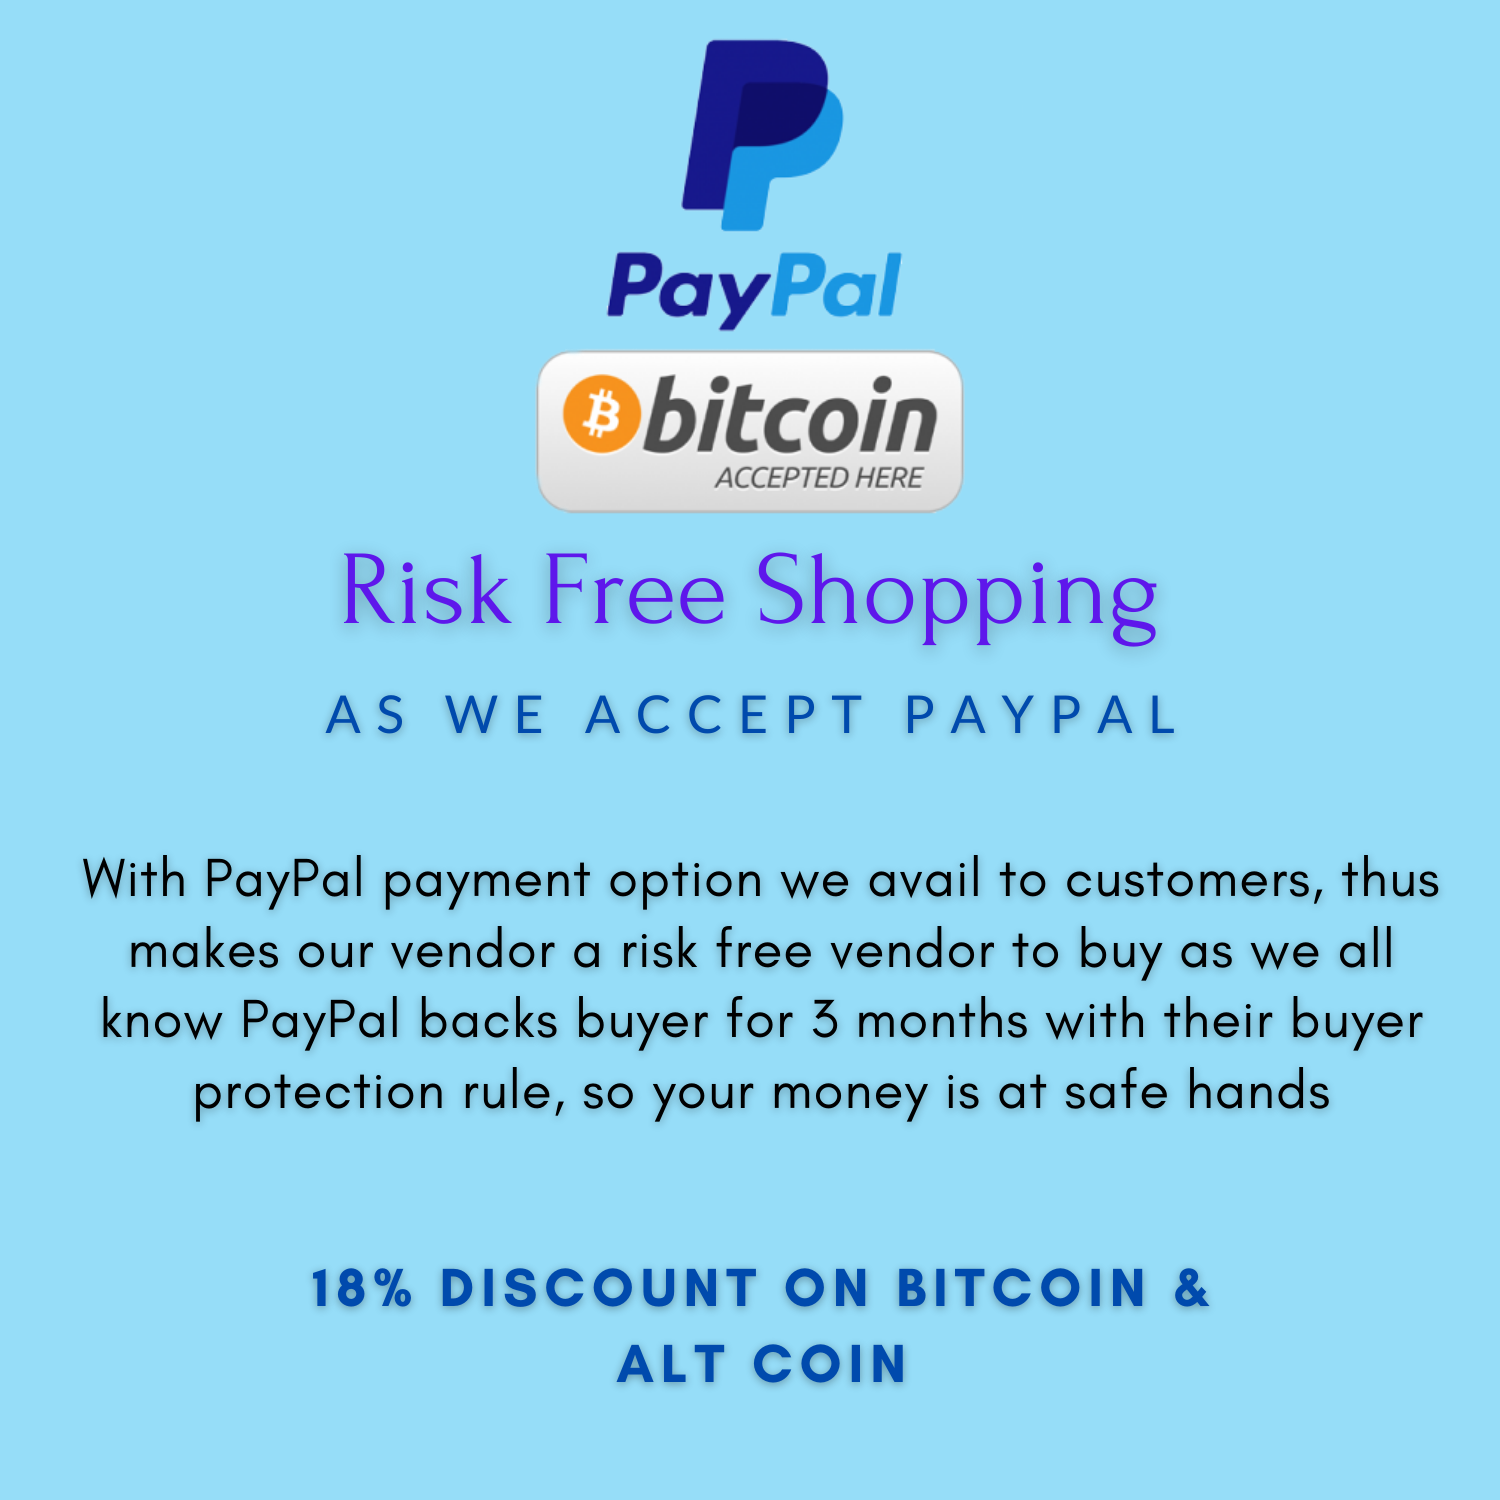 Risk Free Shopping